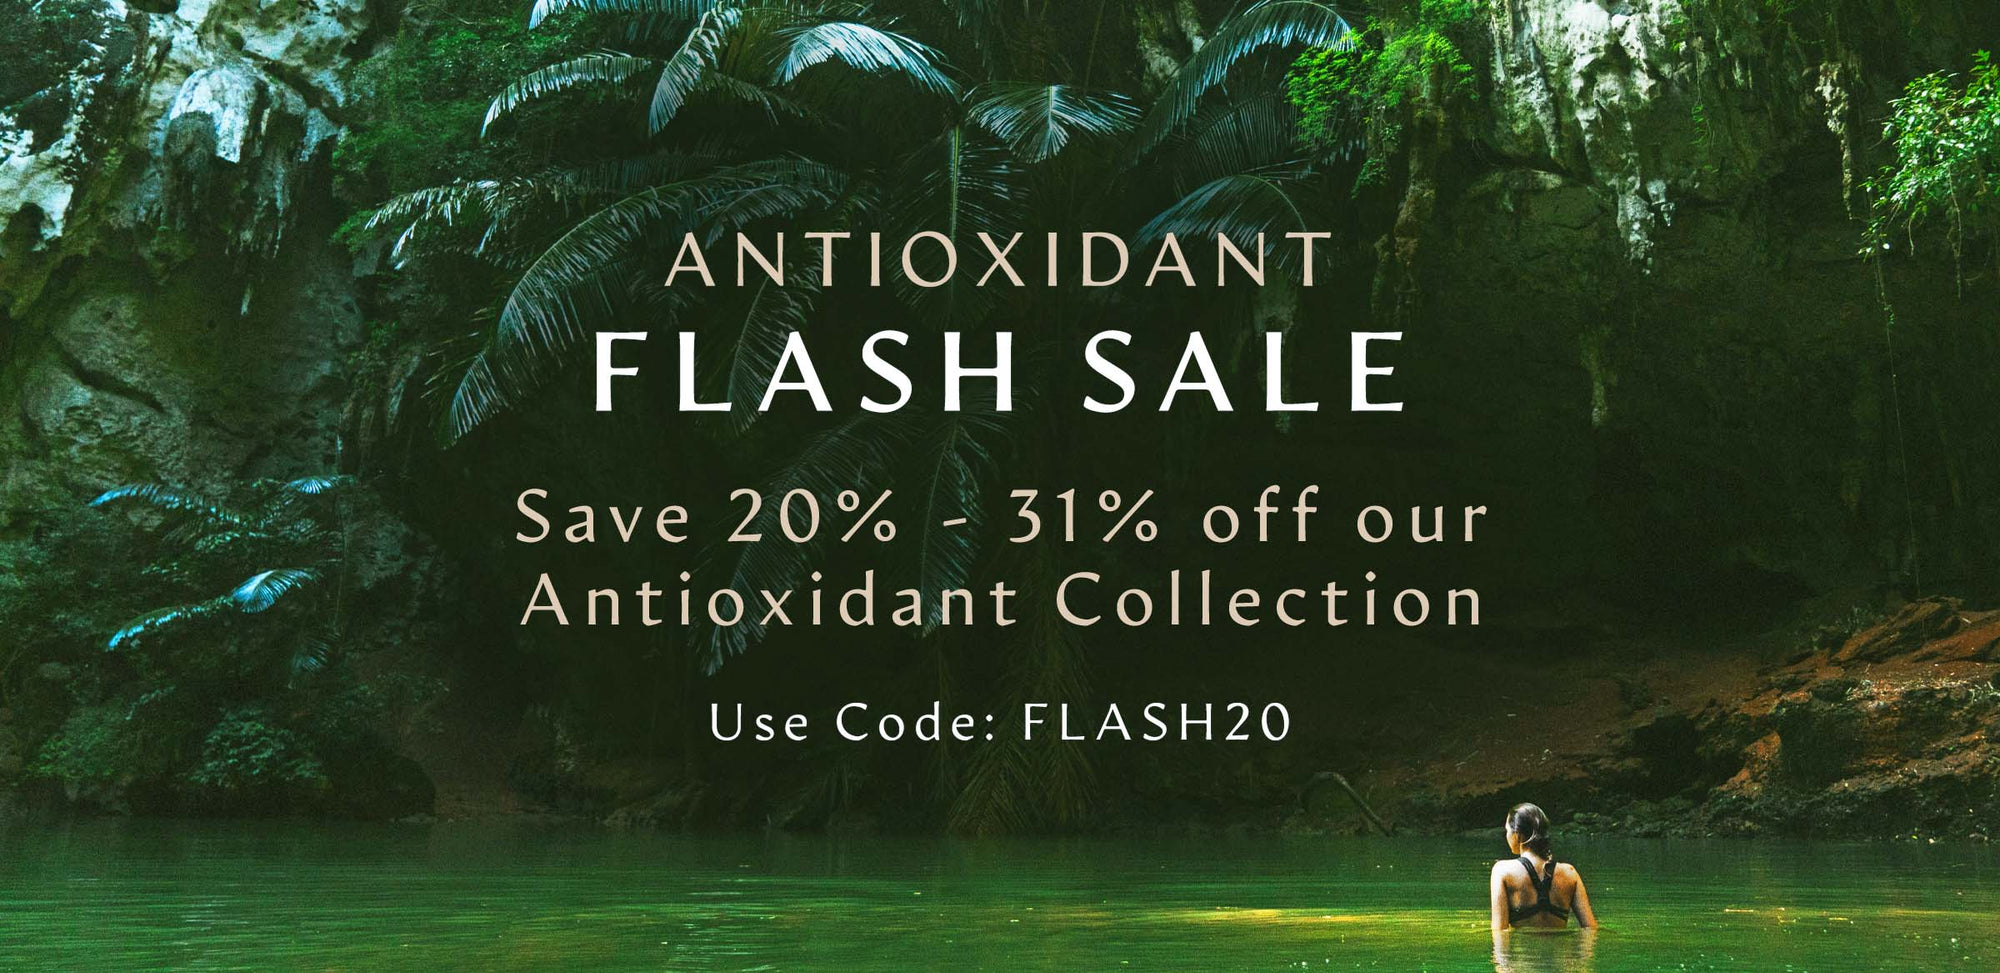 Antioxidant Flash Sale